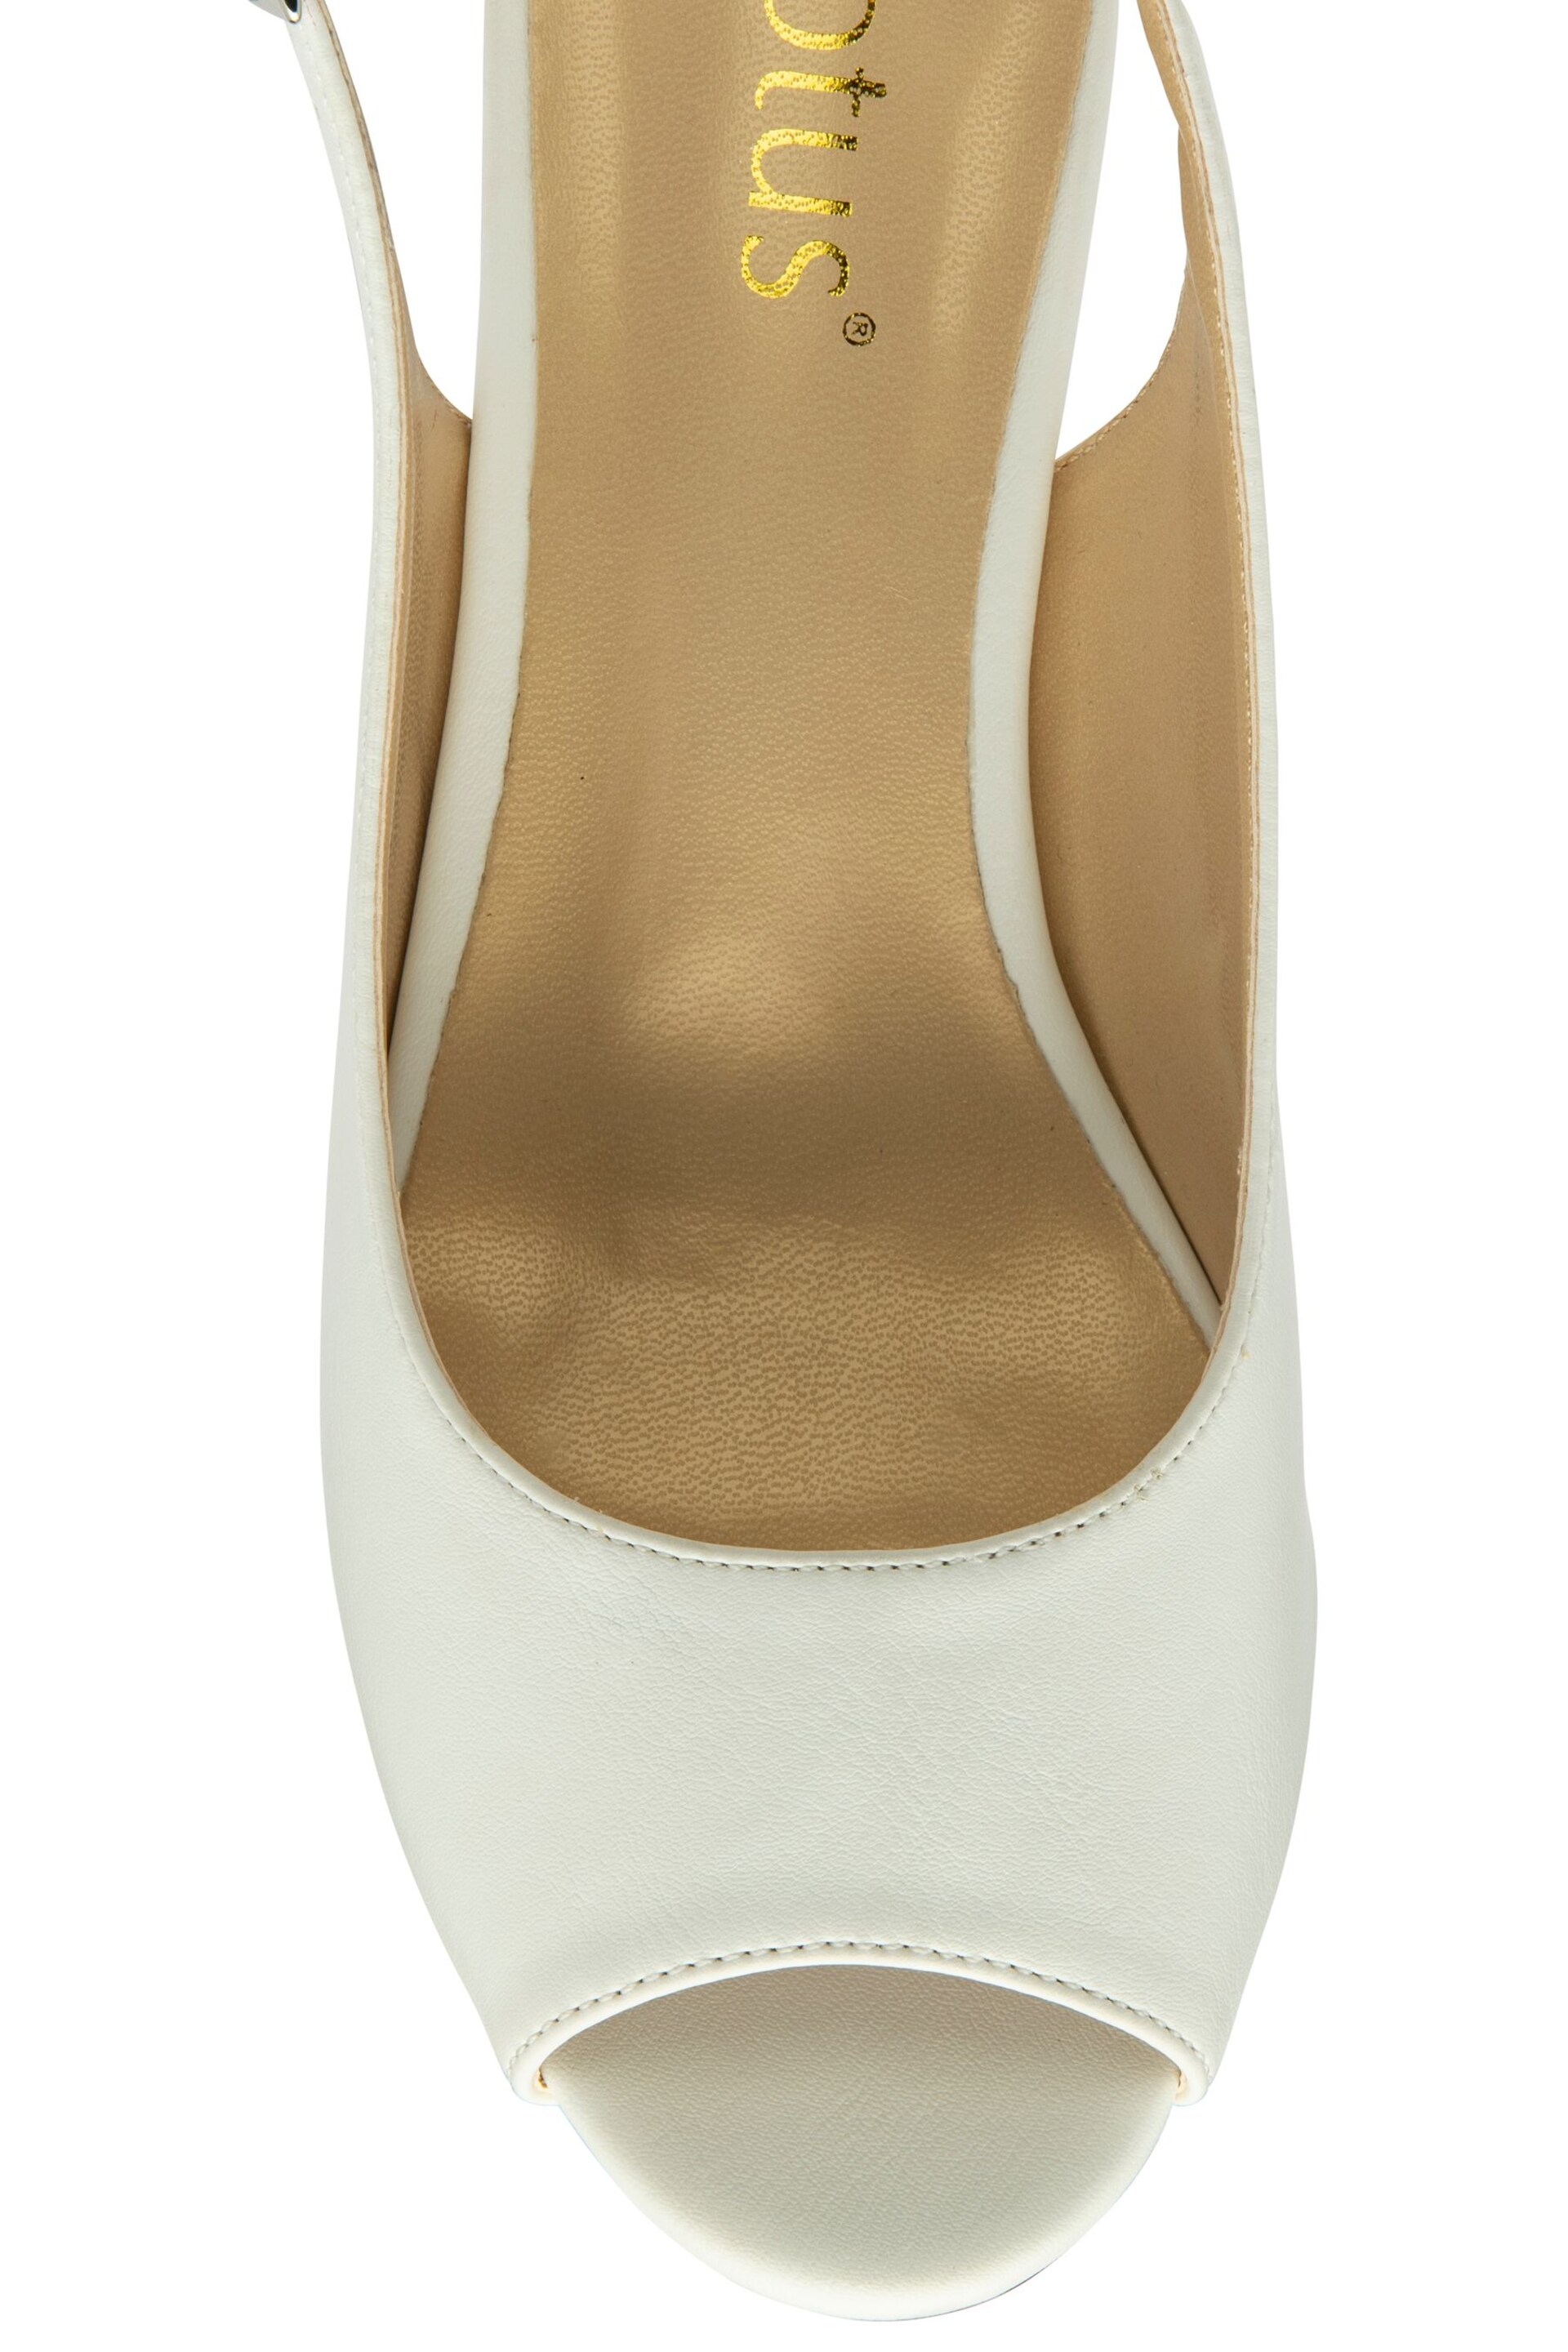 Lotus White Peep Toe Slingback Sandals - Image 4 of 4